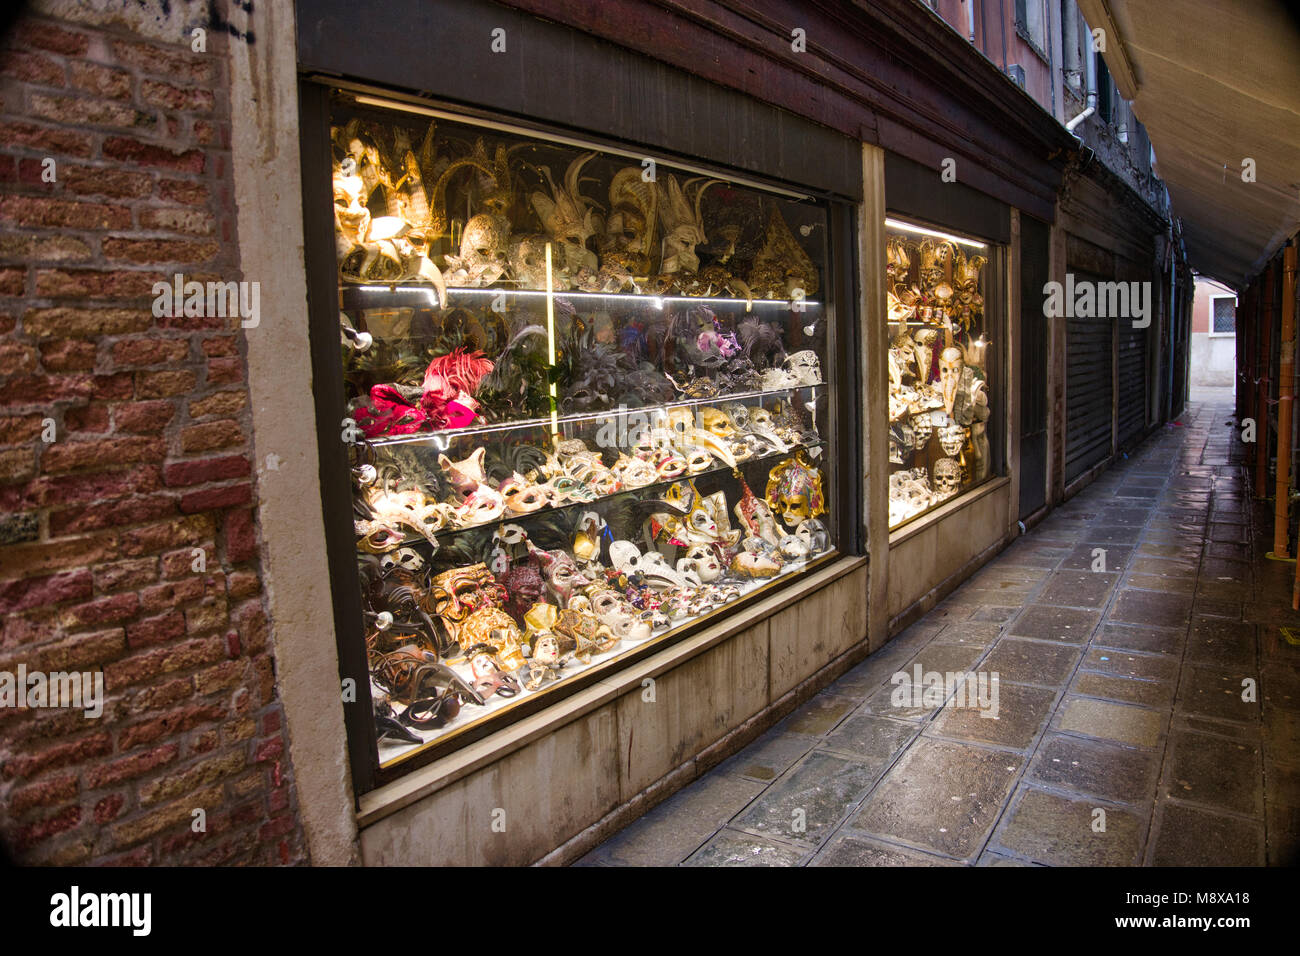 Venezianische Masken shop Fenster anzuzeigen, Venedig, Italien. Stockfoto